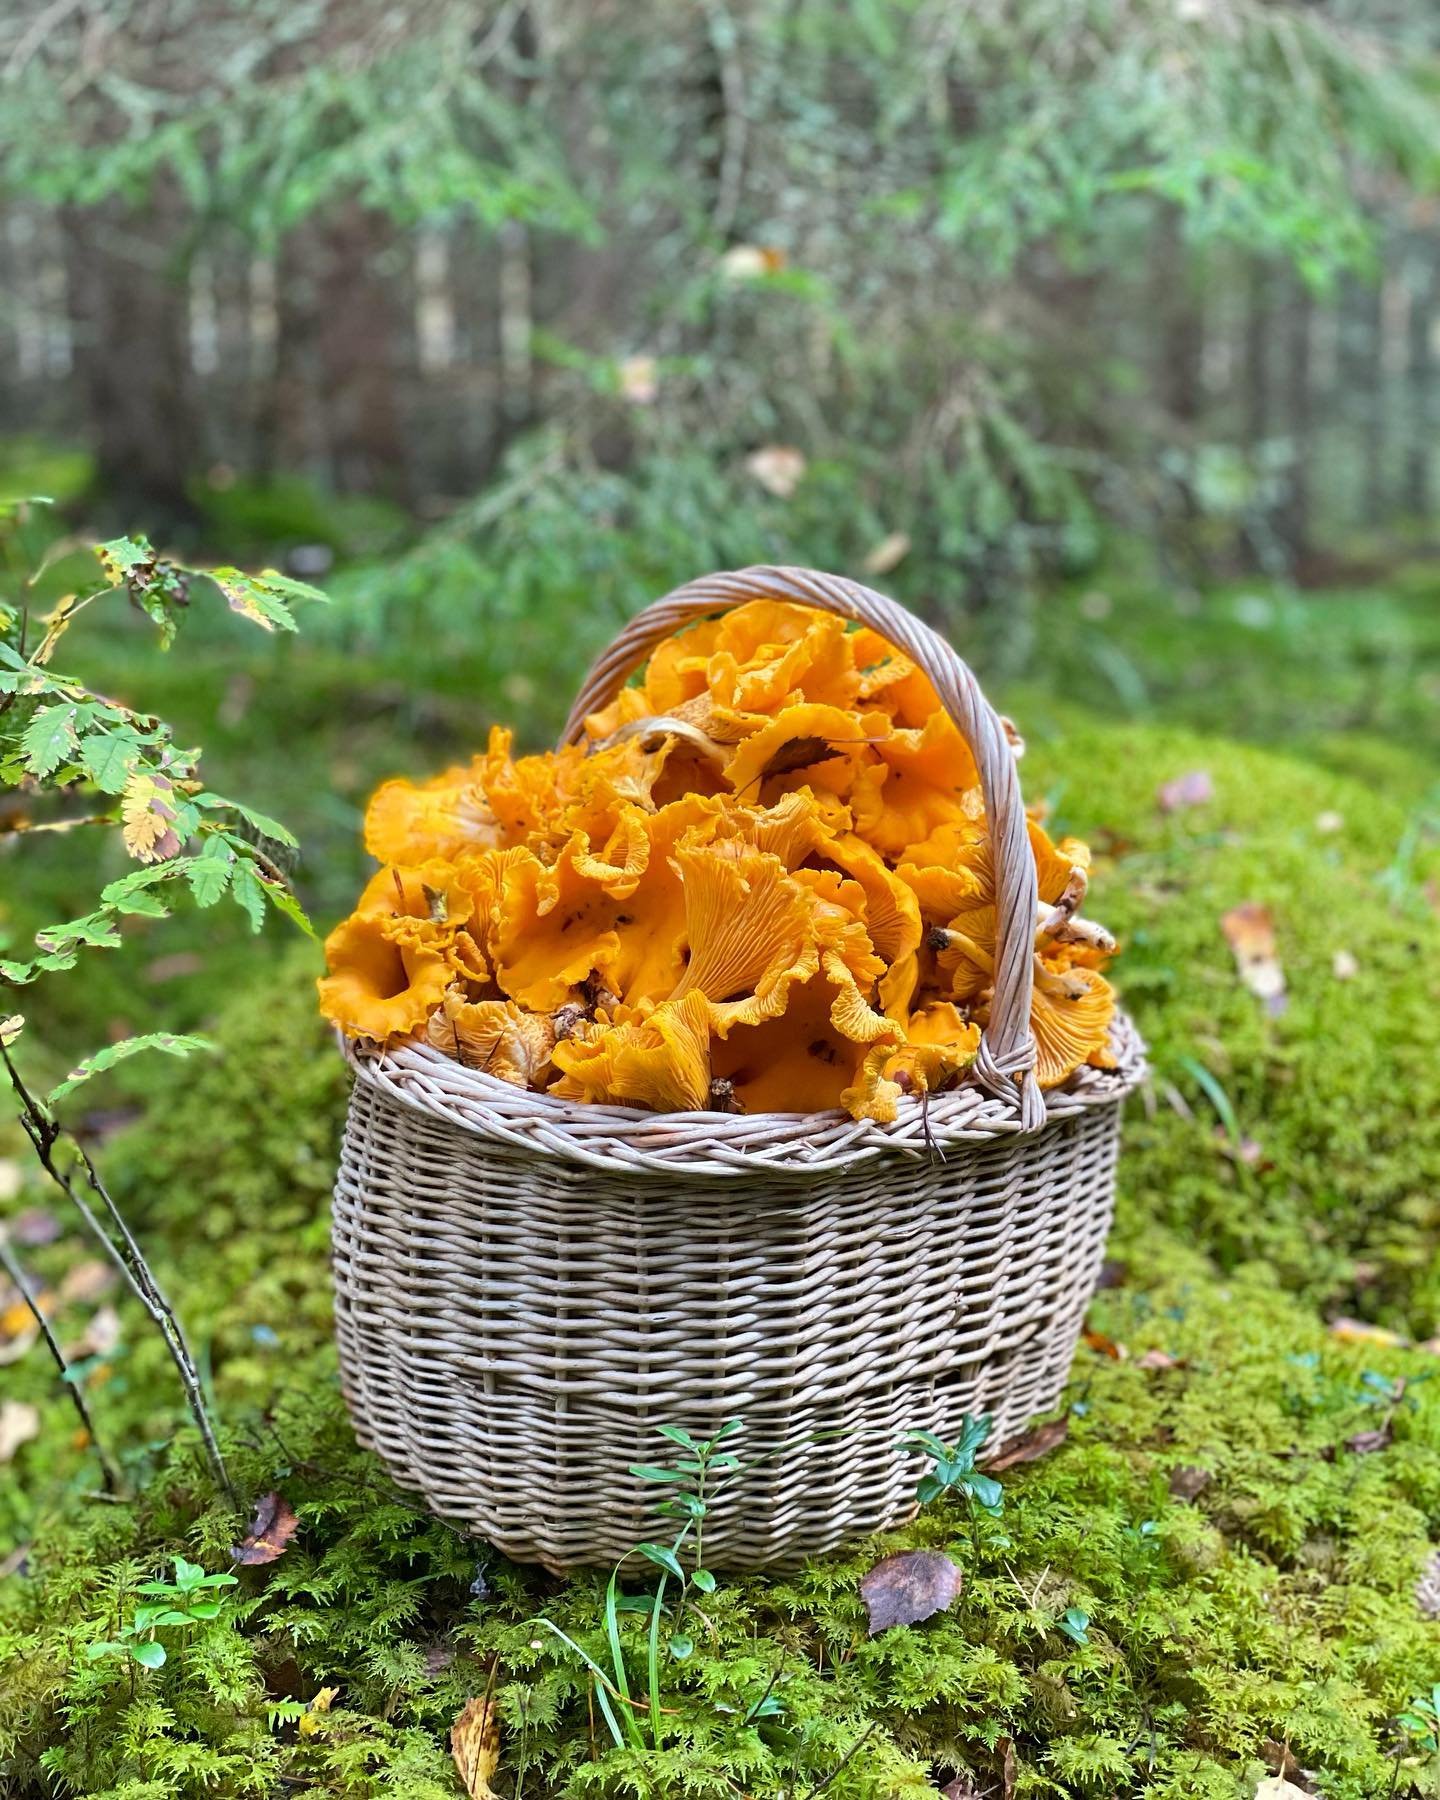 Autumn in Finland. 🍂💛
.
.
.
.
.
#autumn #finland #mushroom #season #chantarelle #big #year #forestfruits #delicious #mushrooms #foraging #forest #countryside #m&ouml;kki